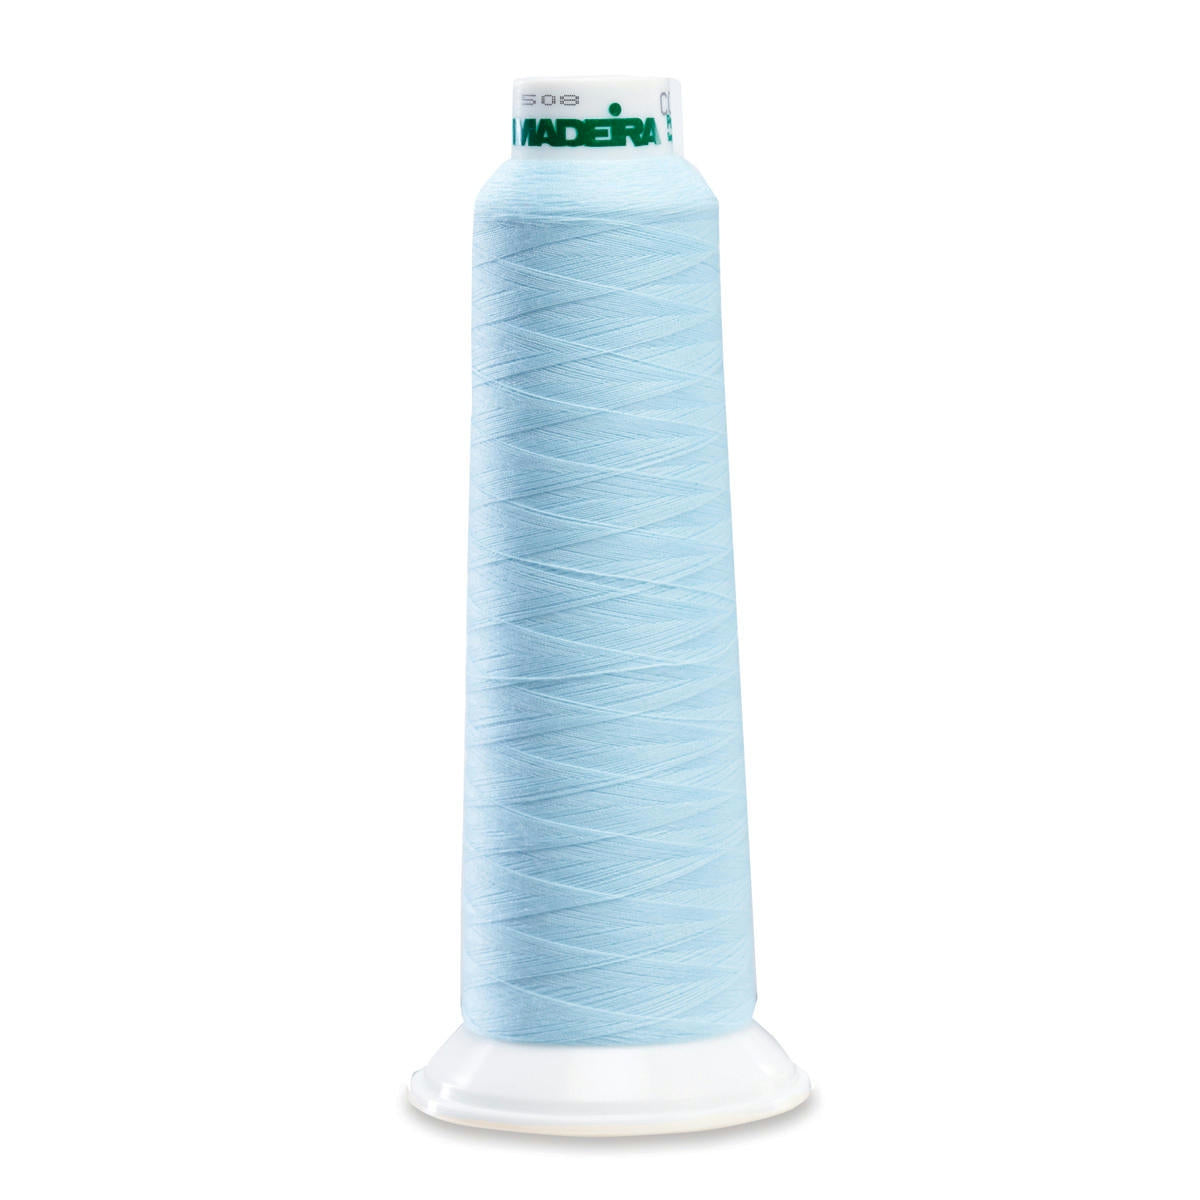 Baby Blue Color, Aerolock Premium Serger Thread, Ref. 9320 by Madeira®